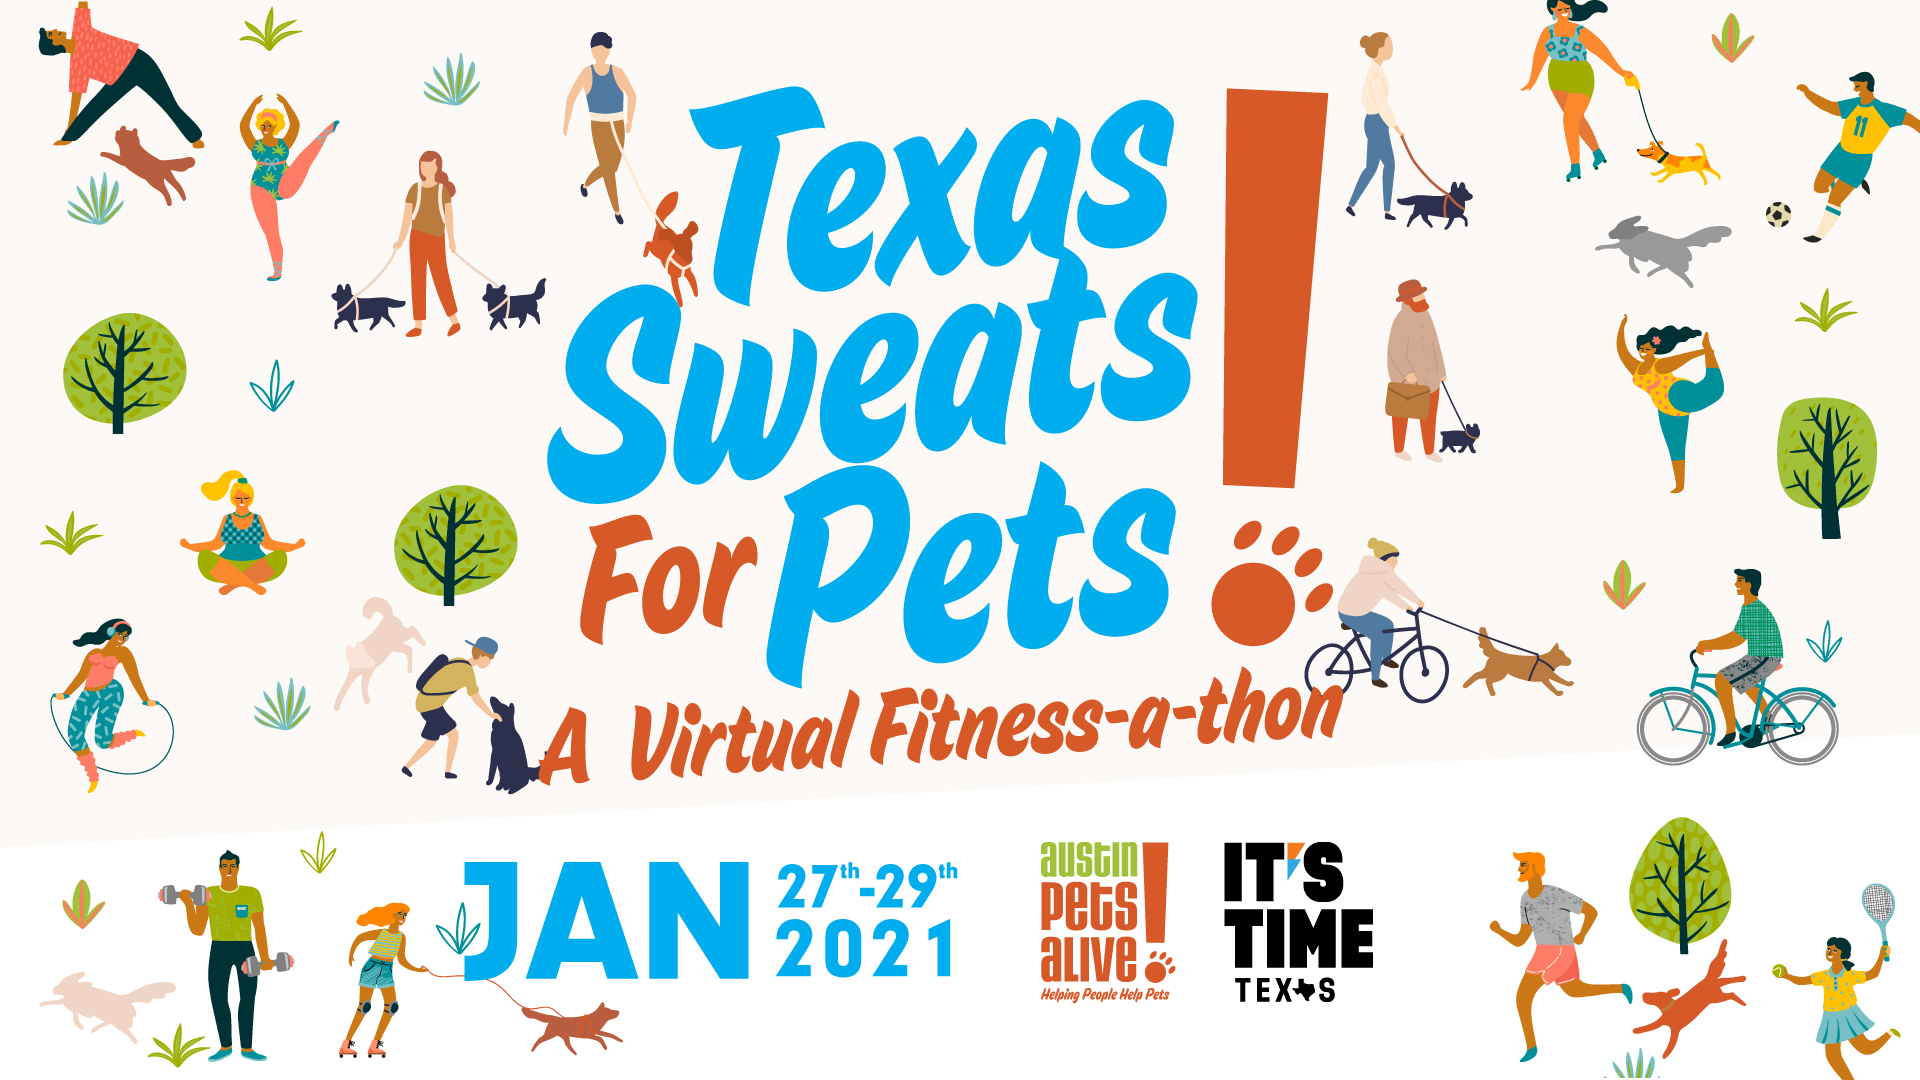 Texas Sweats for Pets - A Virtual Fitness-a-thon